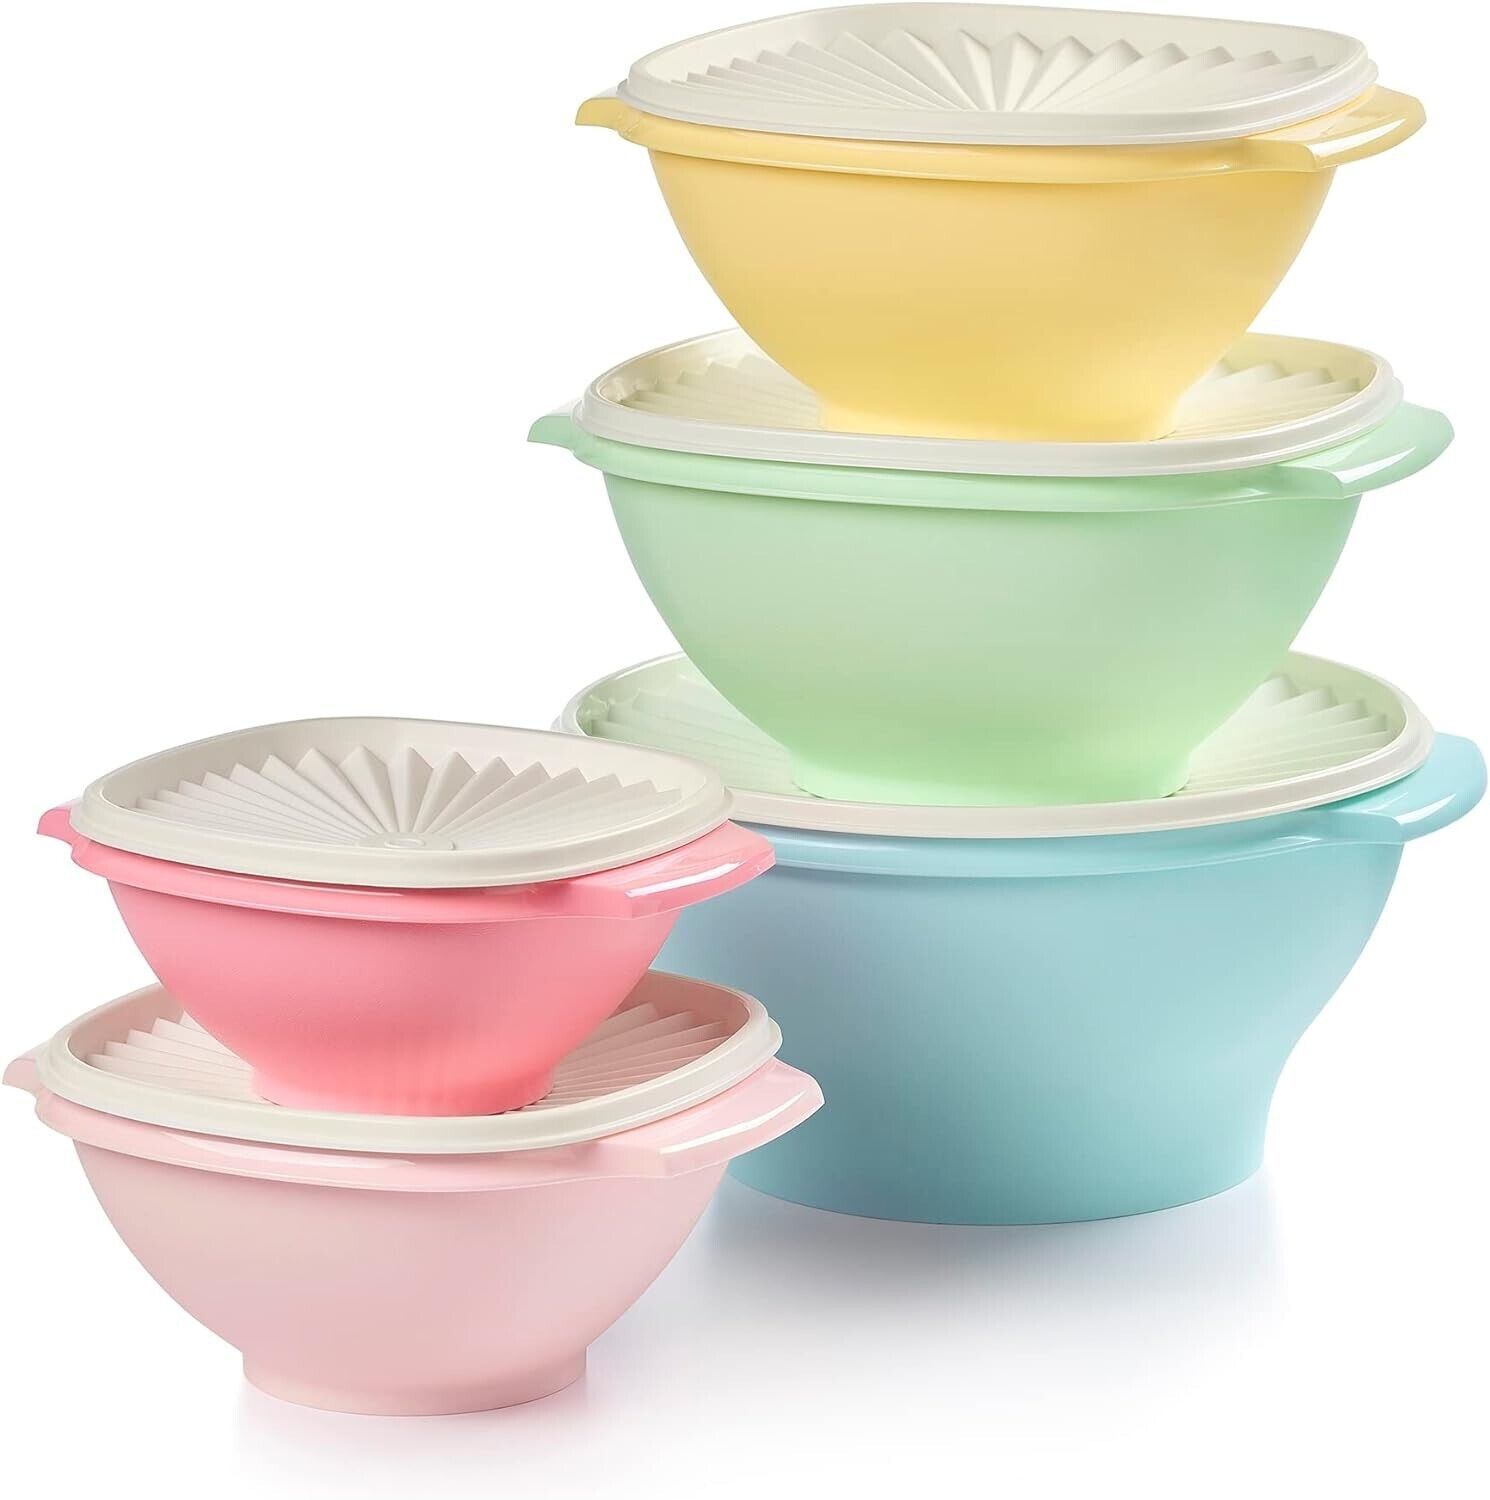 Tupperware Servalier Press N Seal Stackable Bowls Pastel Colors Set of 5  New